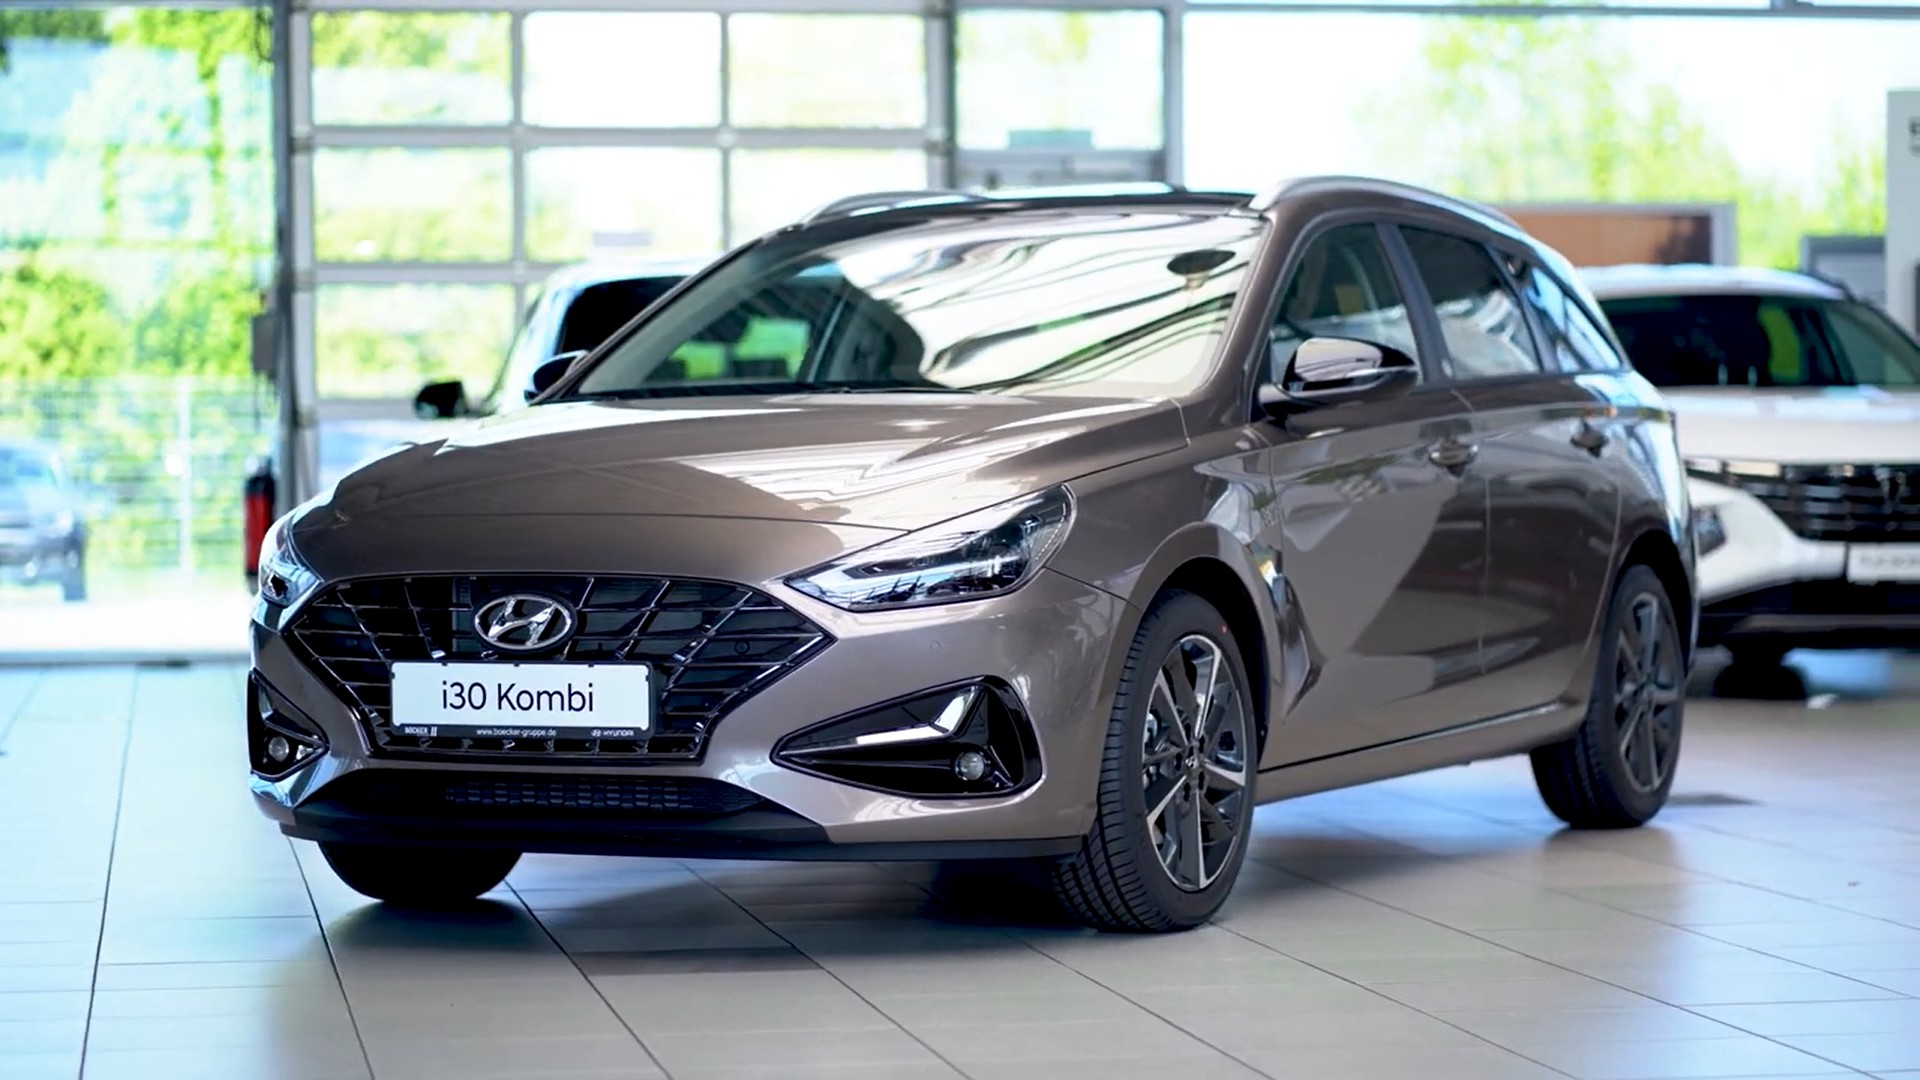 Video: Hyundai i30 Kombi